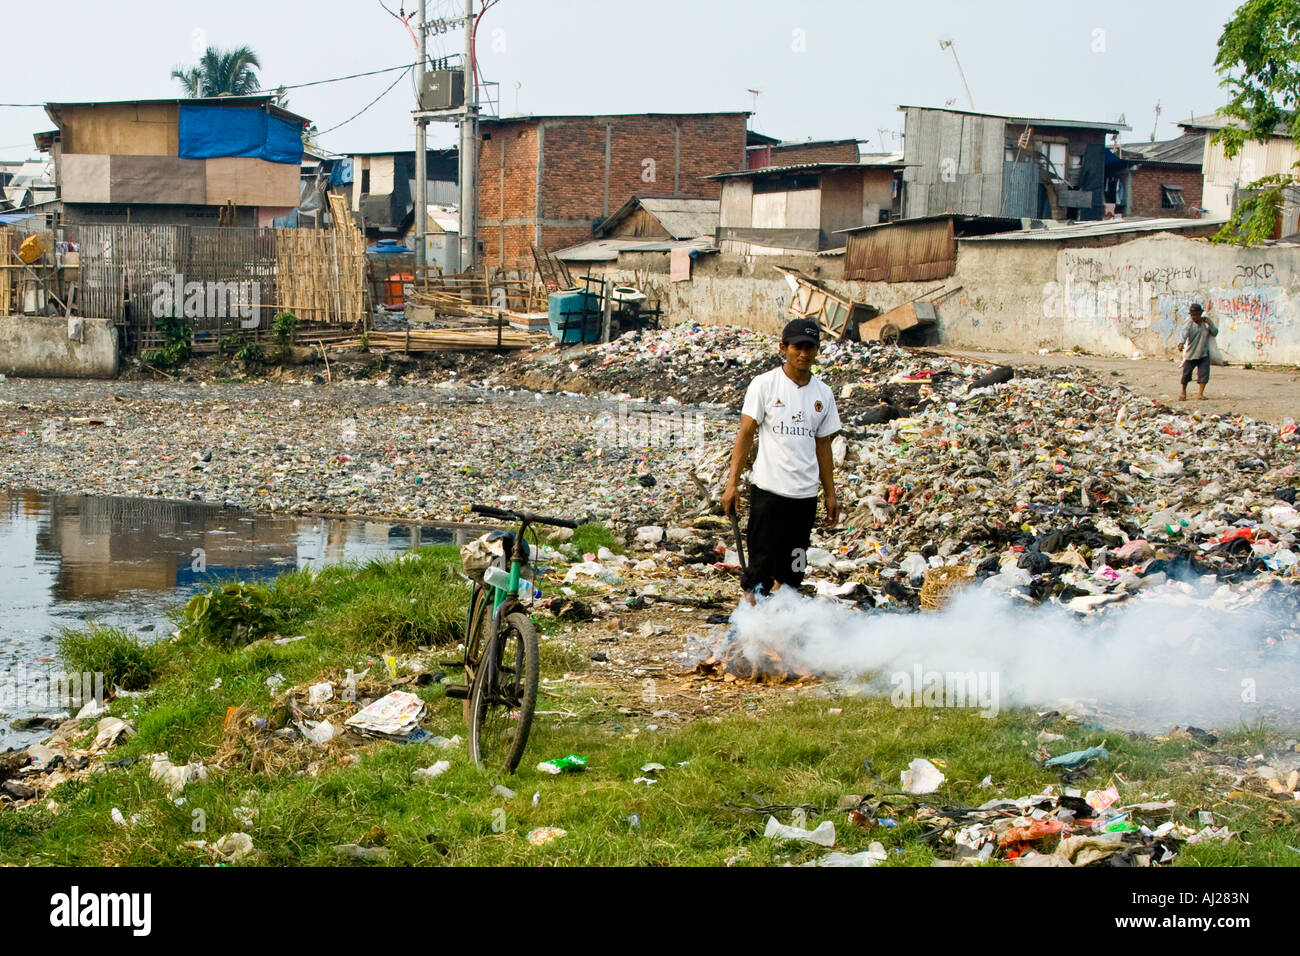 Burning Rubbish on the Garbage Heap Bordering a Poor Neighborhood Slum Jakarta Indonesia Stock Photo